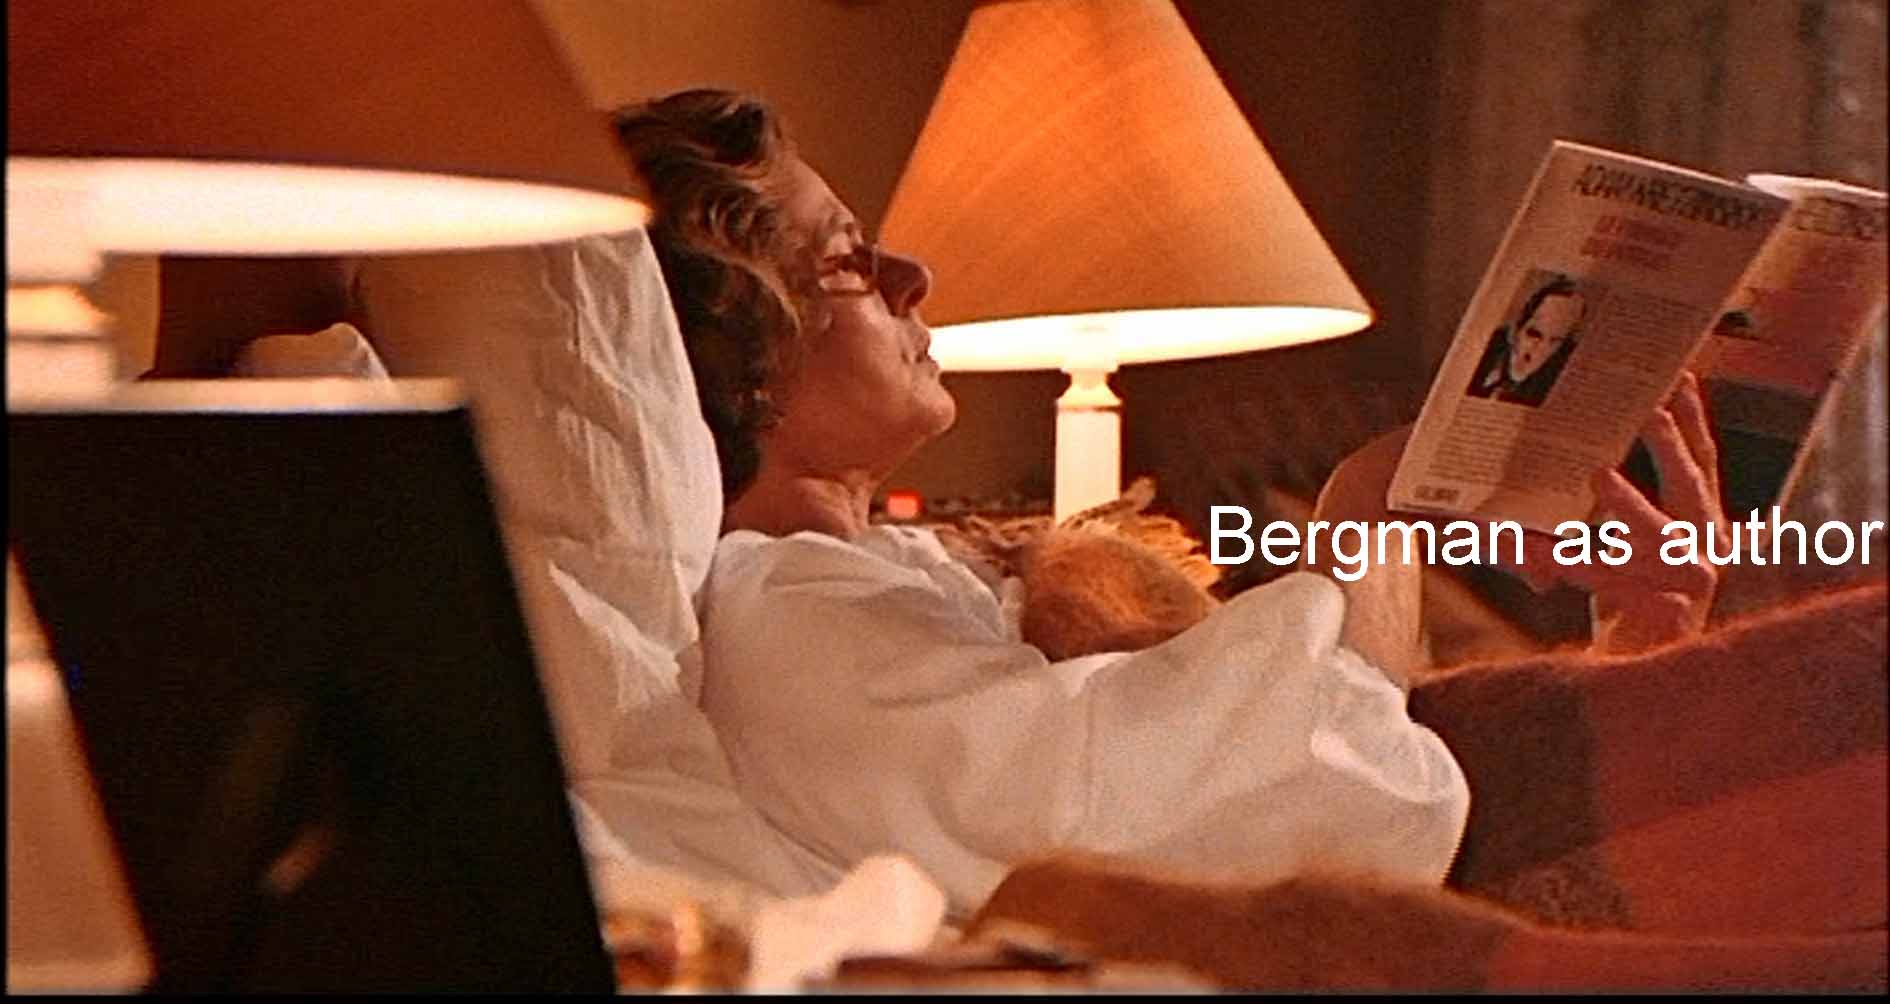 Bergman as author